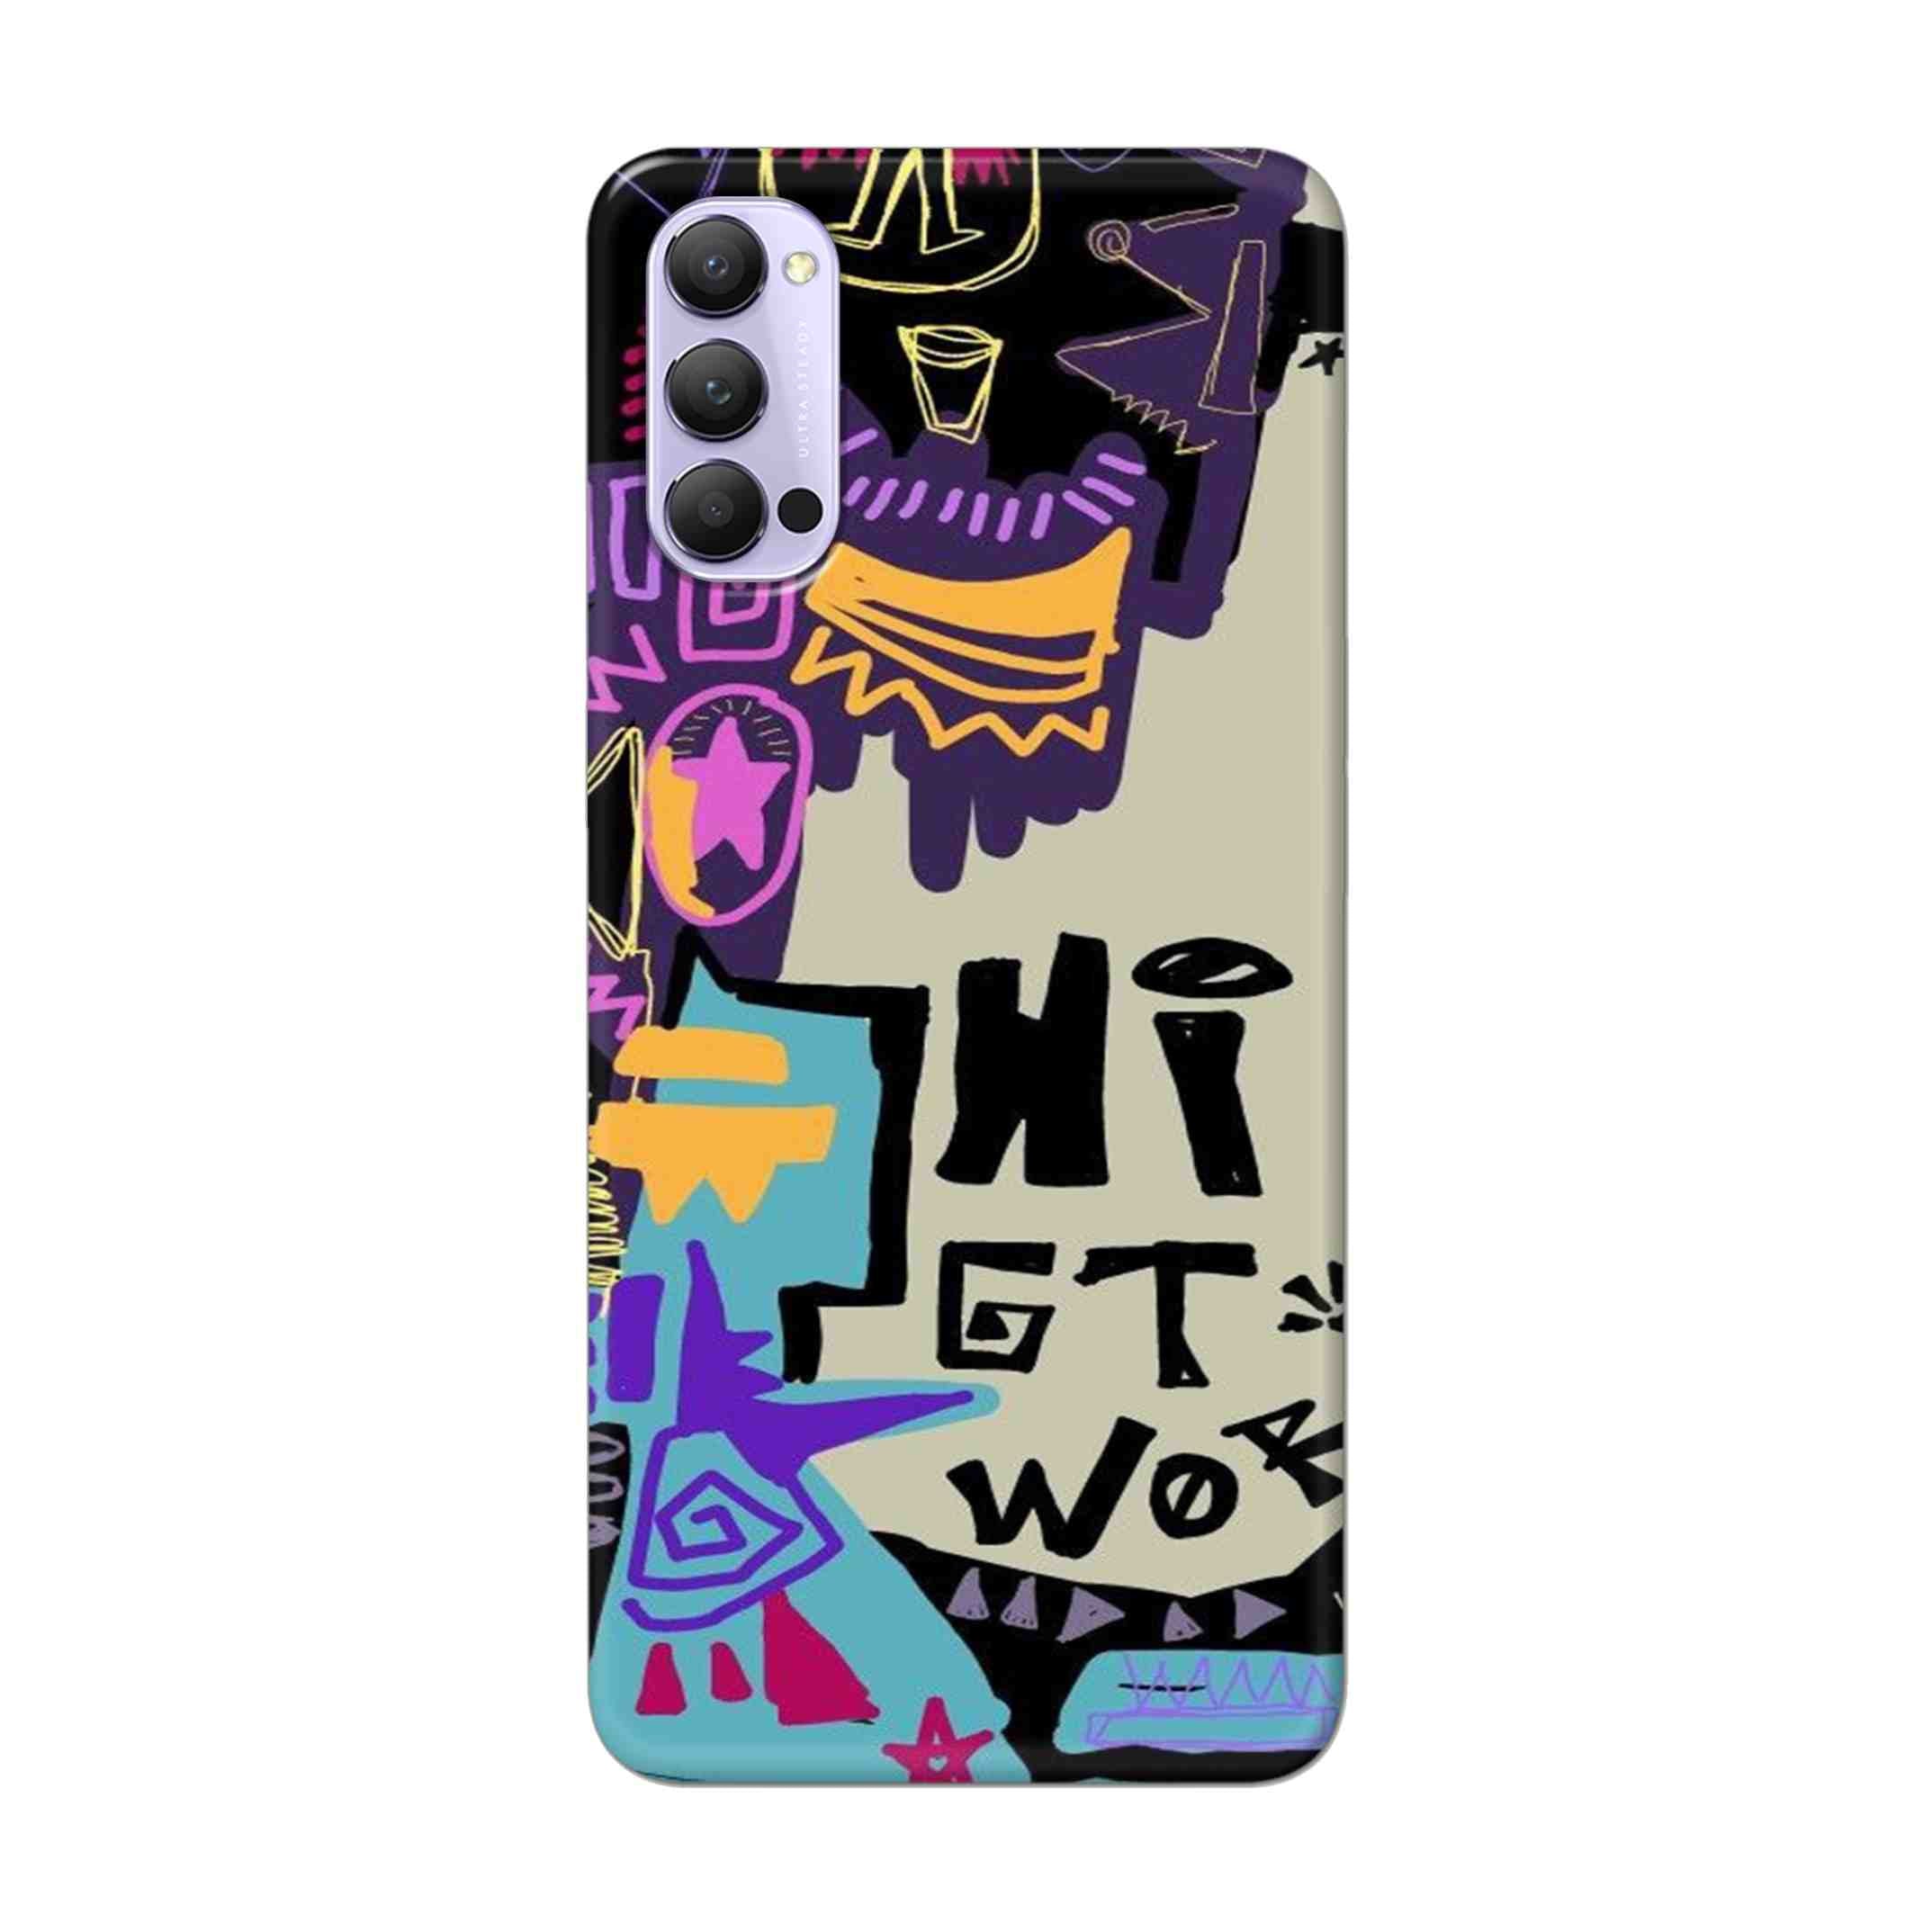 Buy Hi Gt World Hard Back Mobile Phone Case Cover For Oppo Reno 4 Pro Online